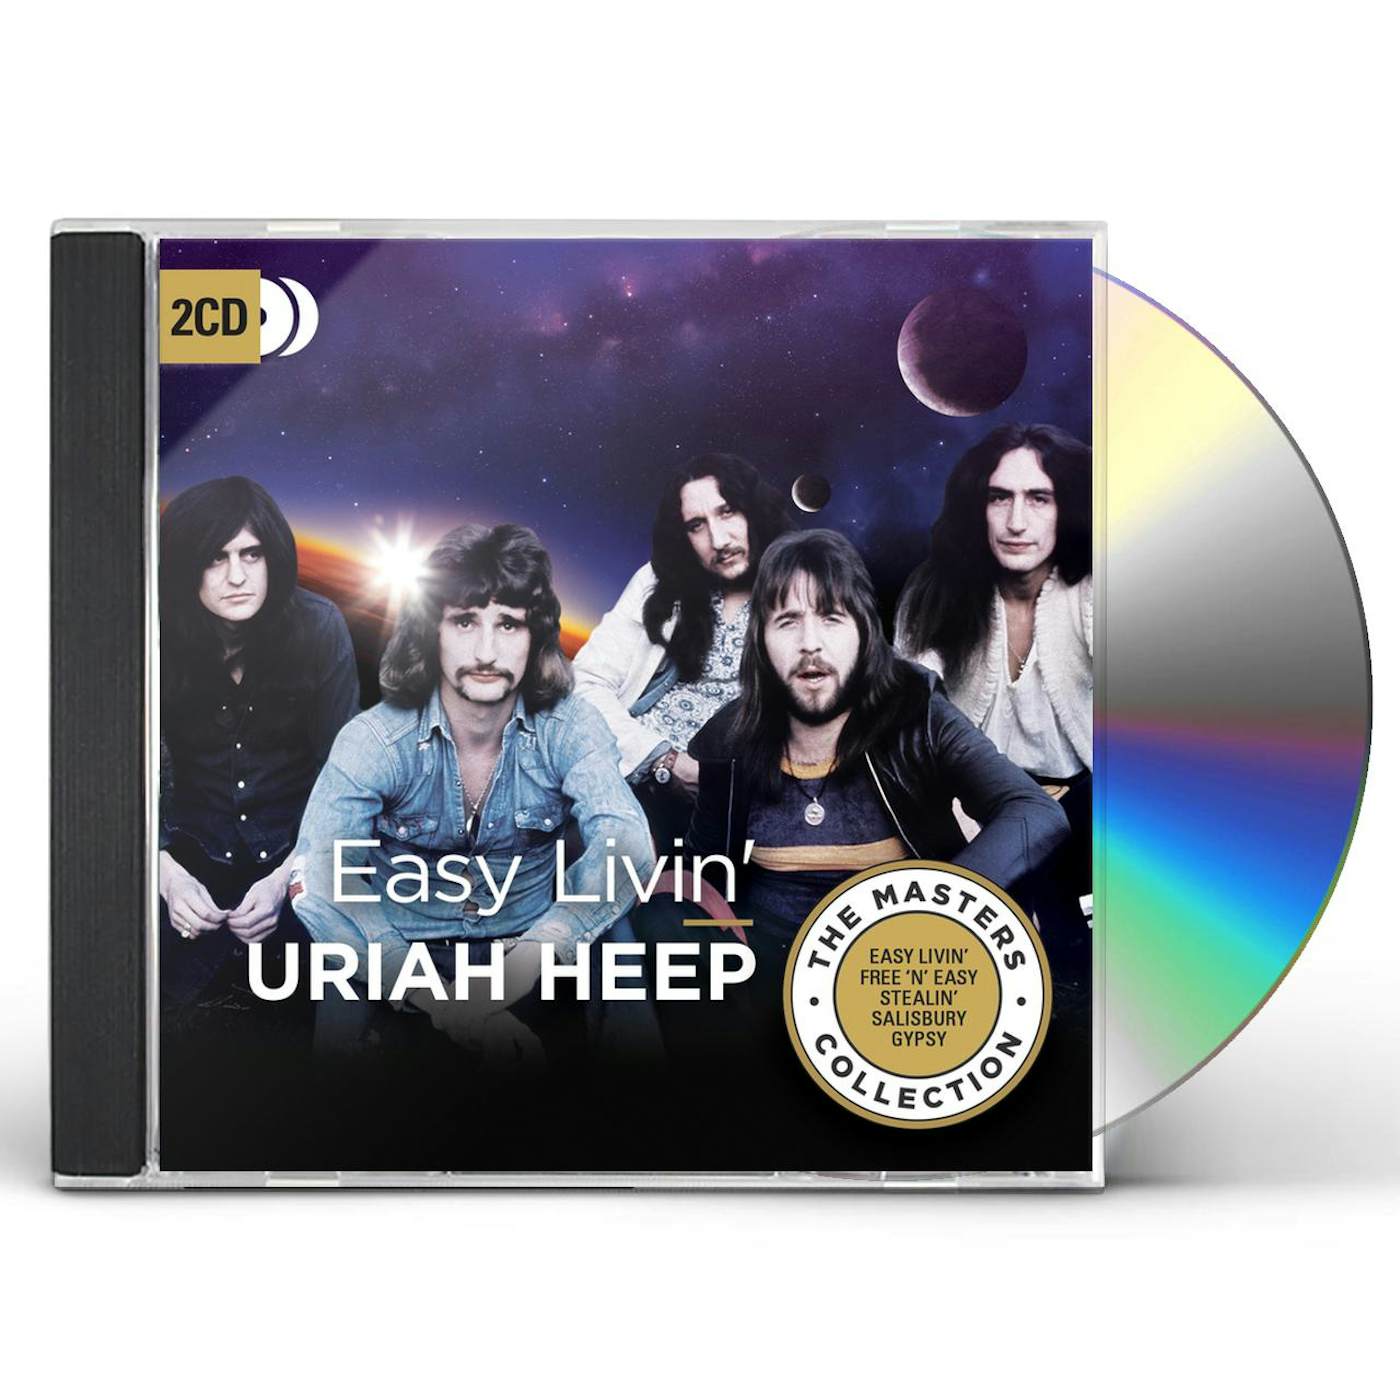 Uriah Heep EASY LIVIN' CD